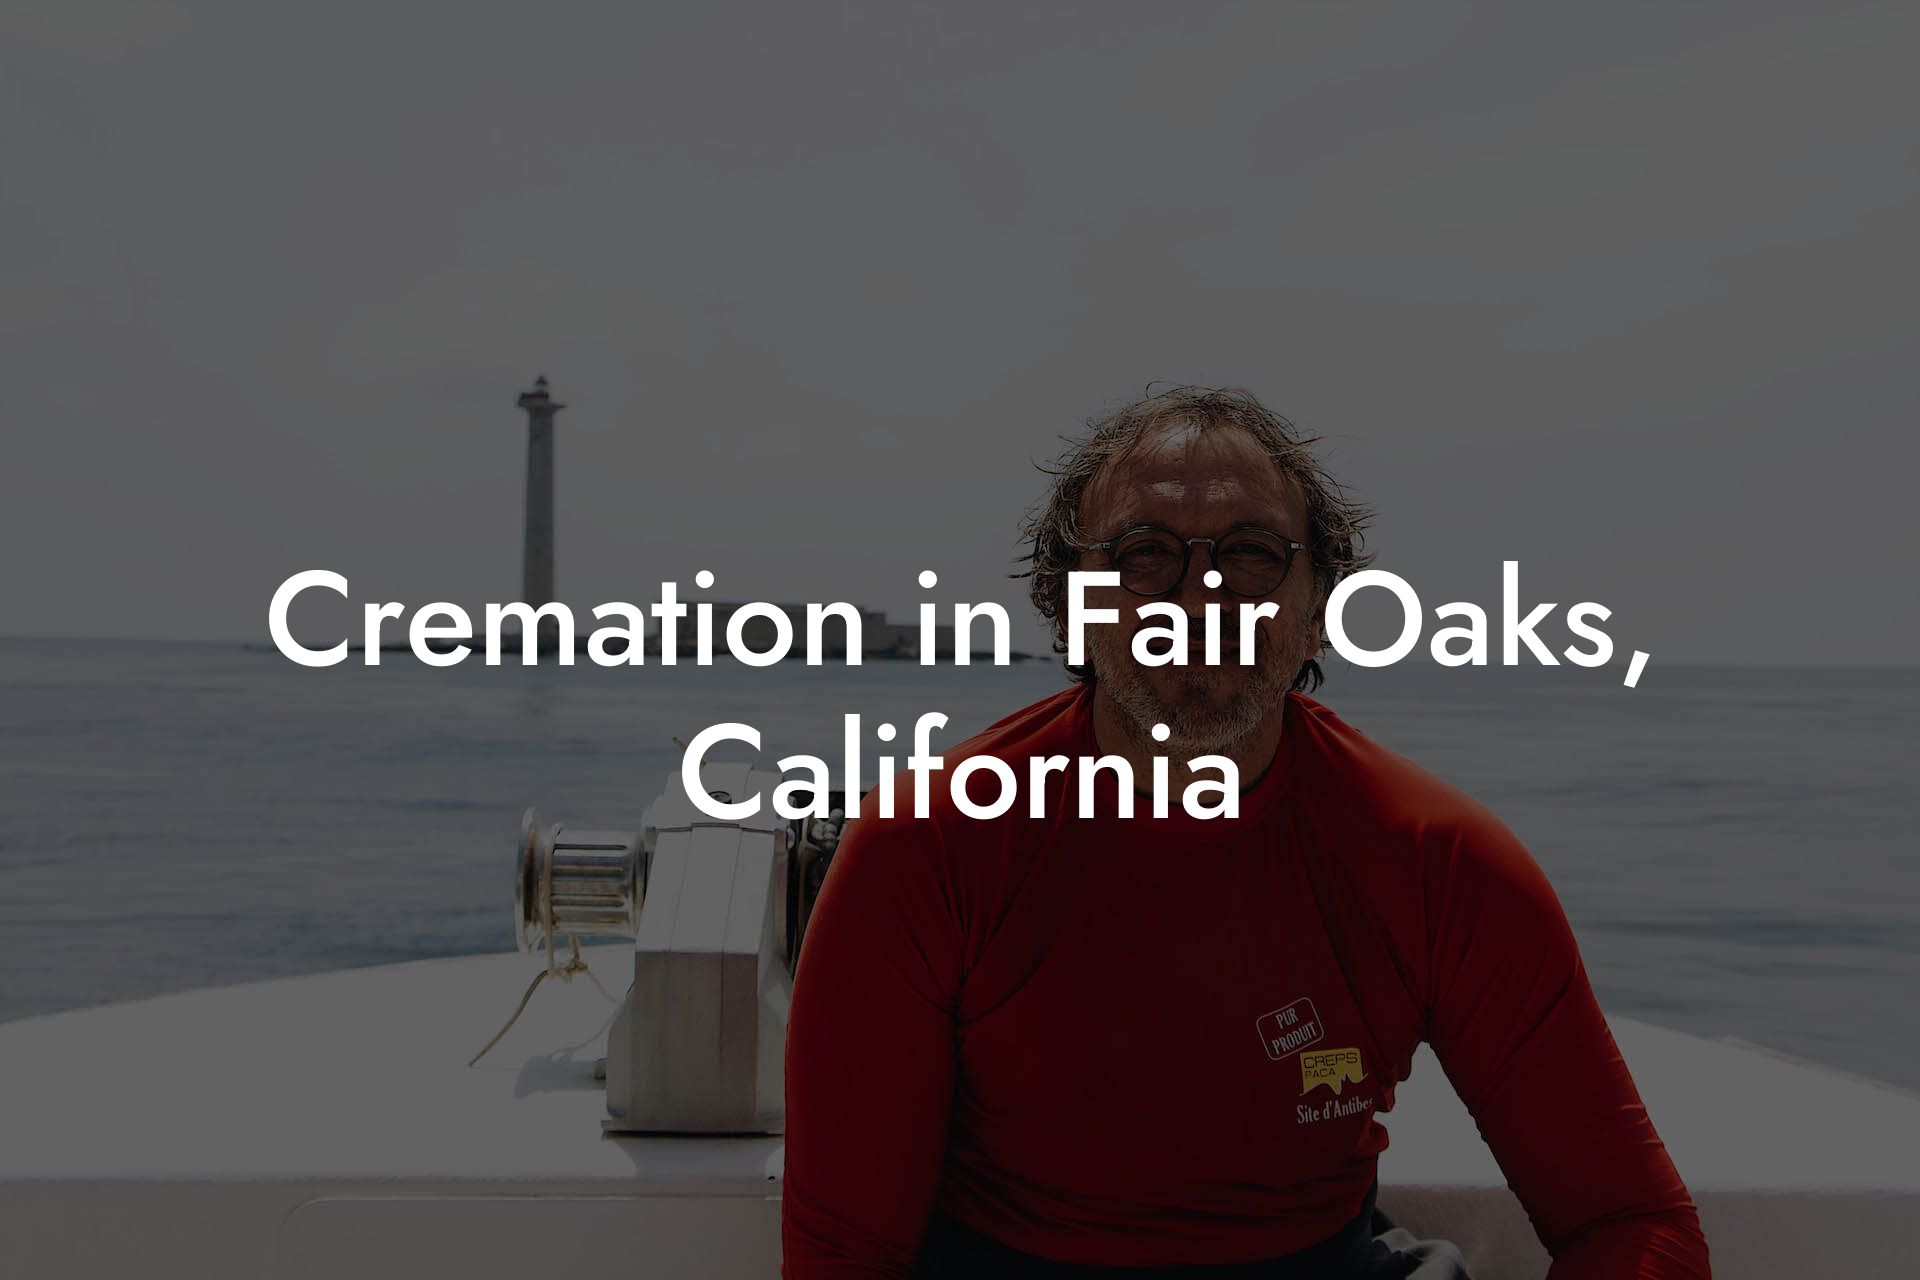 Cremation in Fair Oaks, California